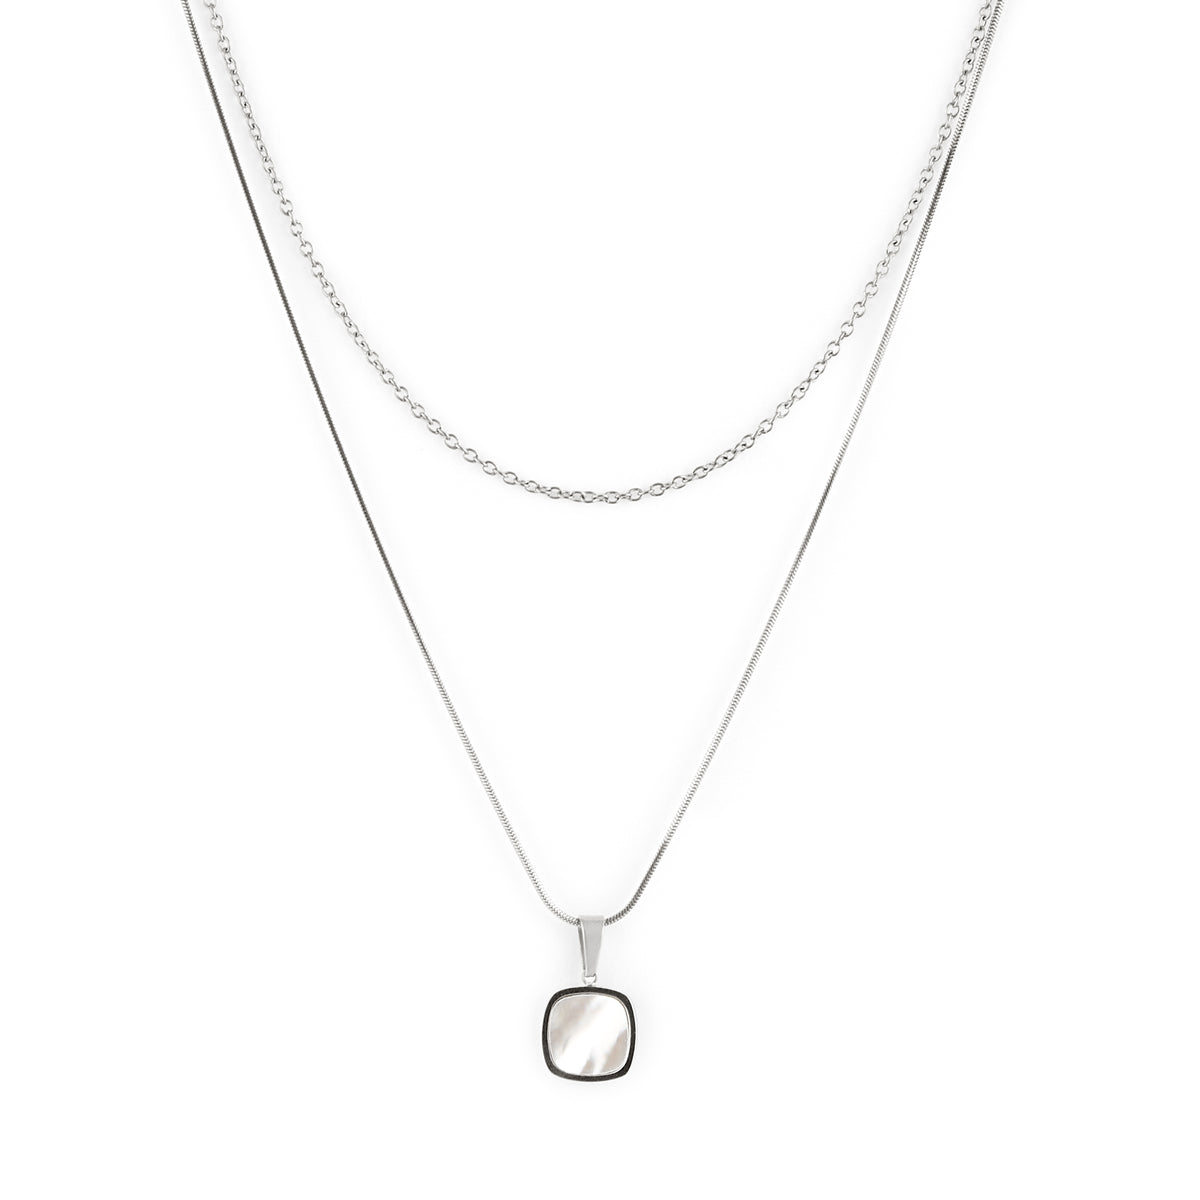 Mirage Necklace - Silver